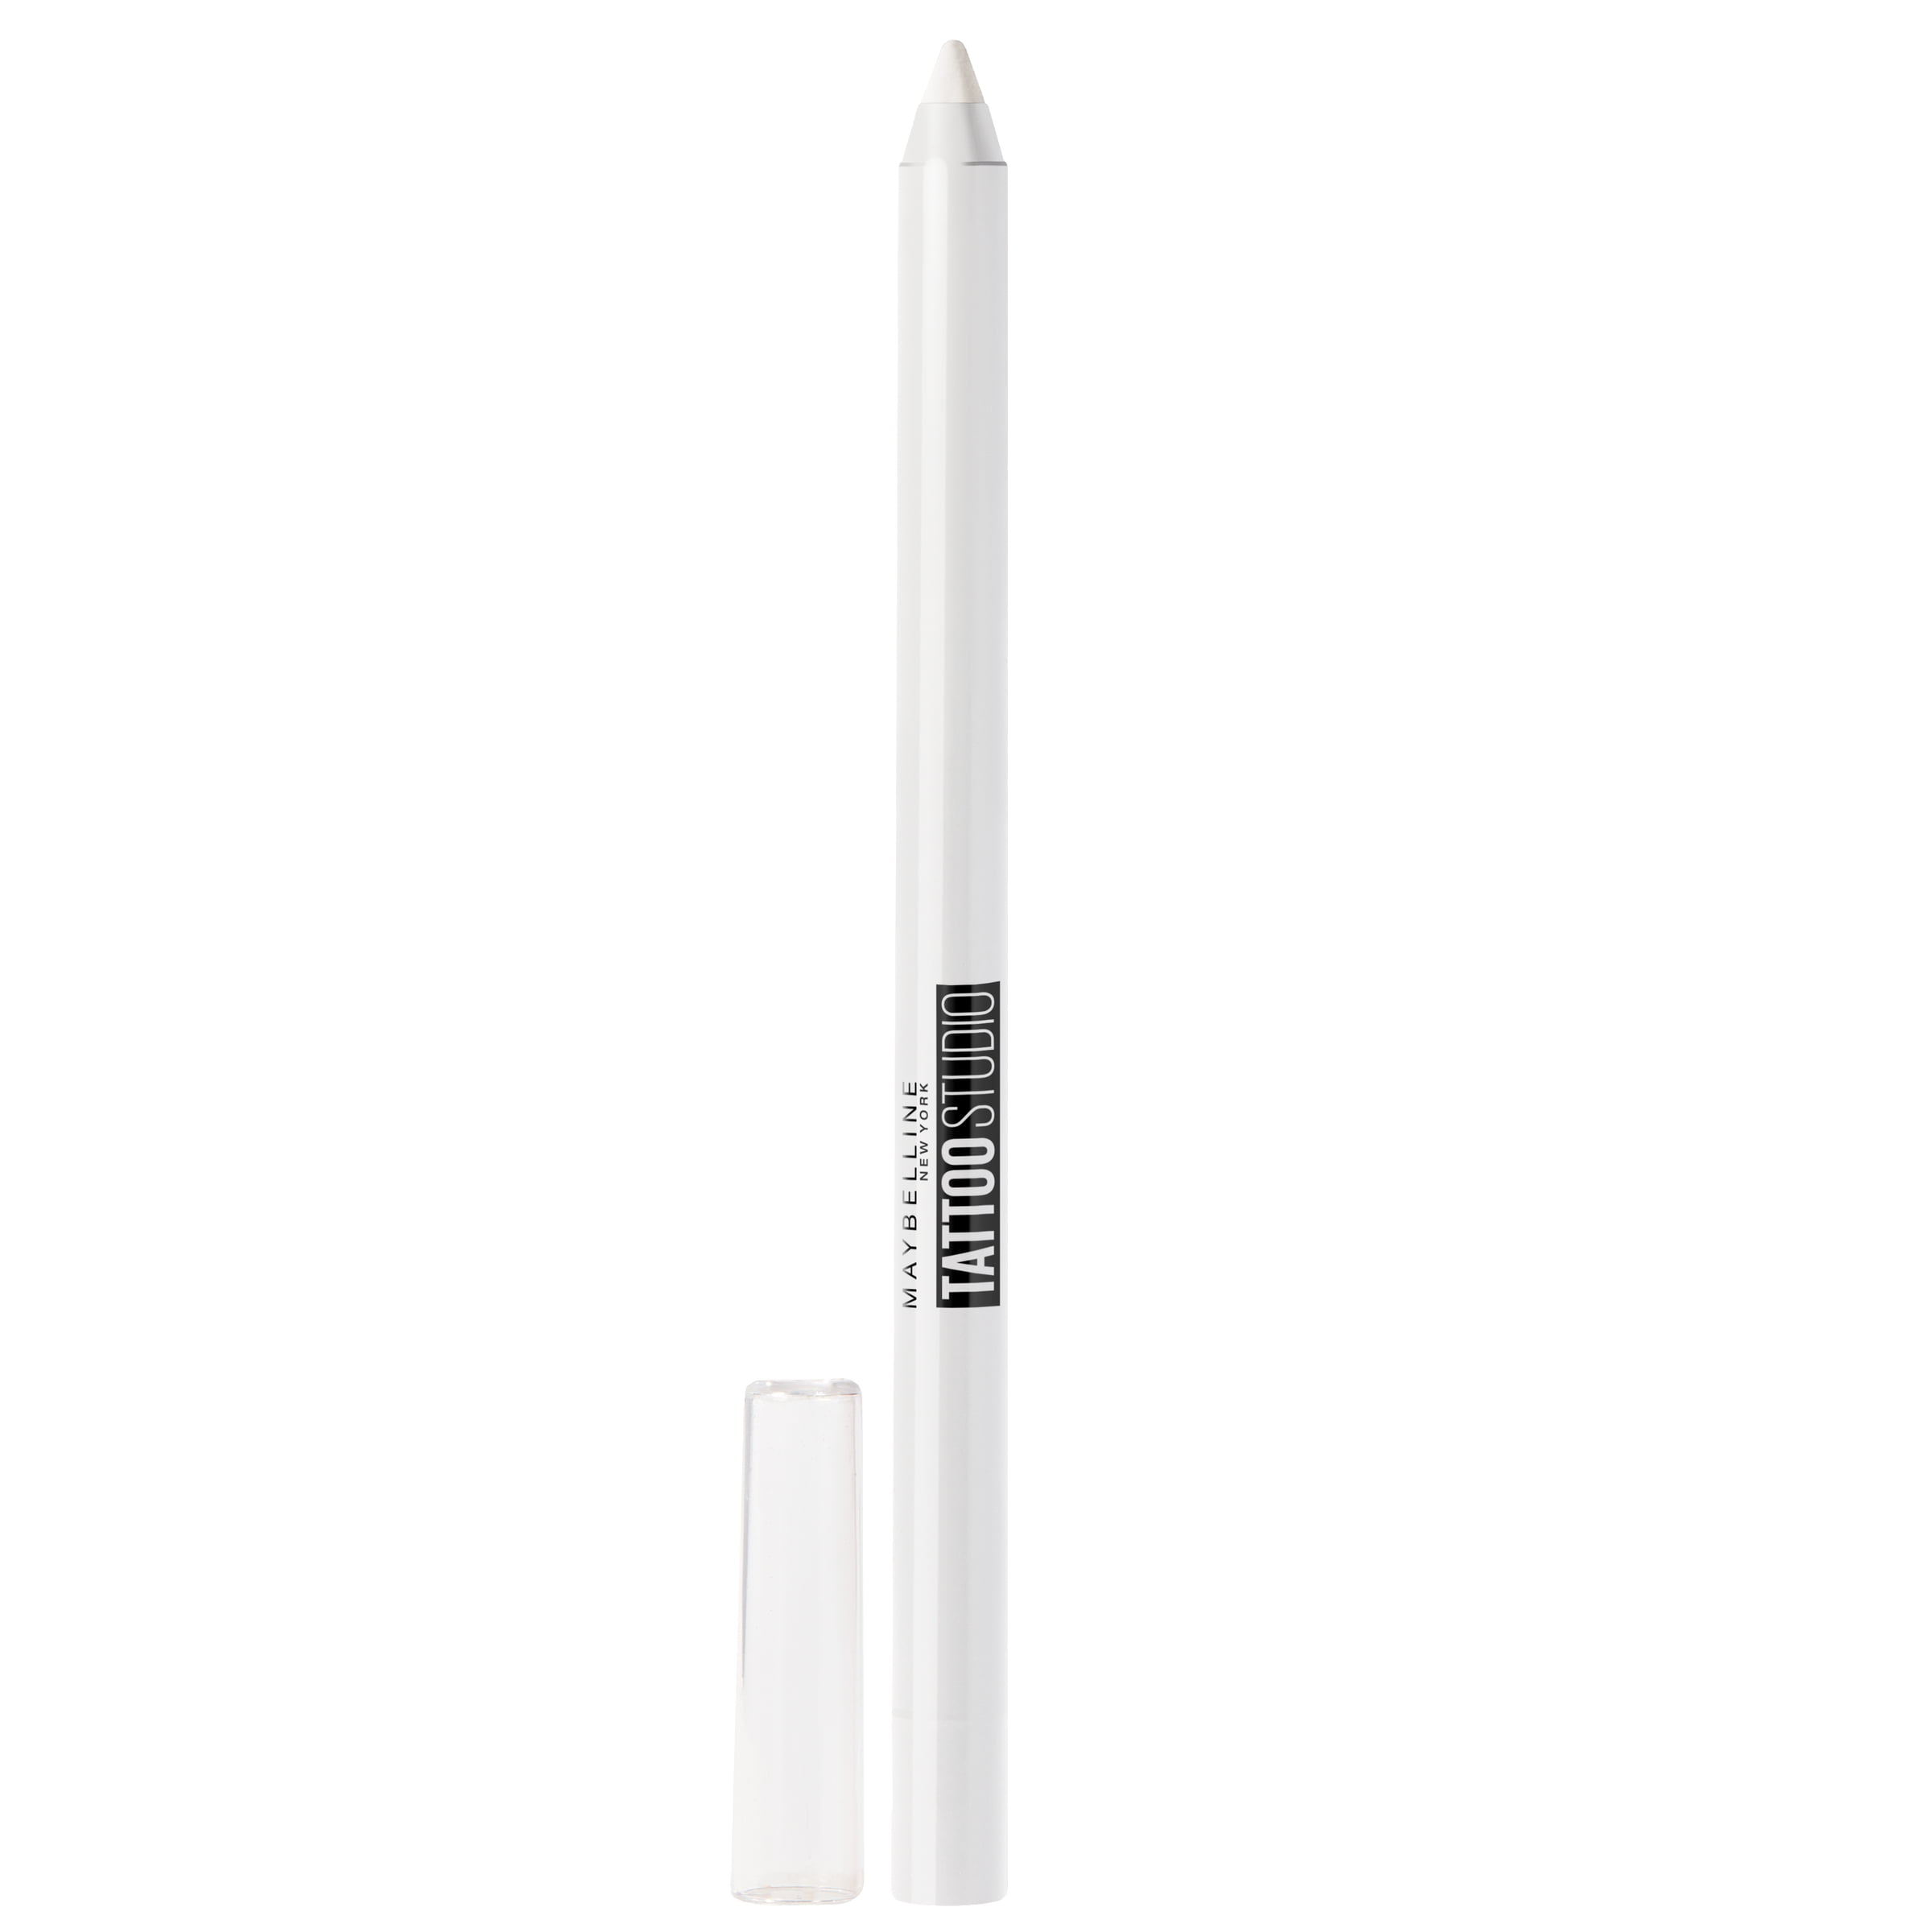 Maybelline TattooStudio Waterproof, Long Wearing, Eyeliner Pencil Makeup, Polished White, 0.04 oz